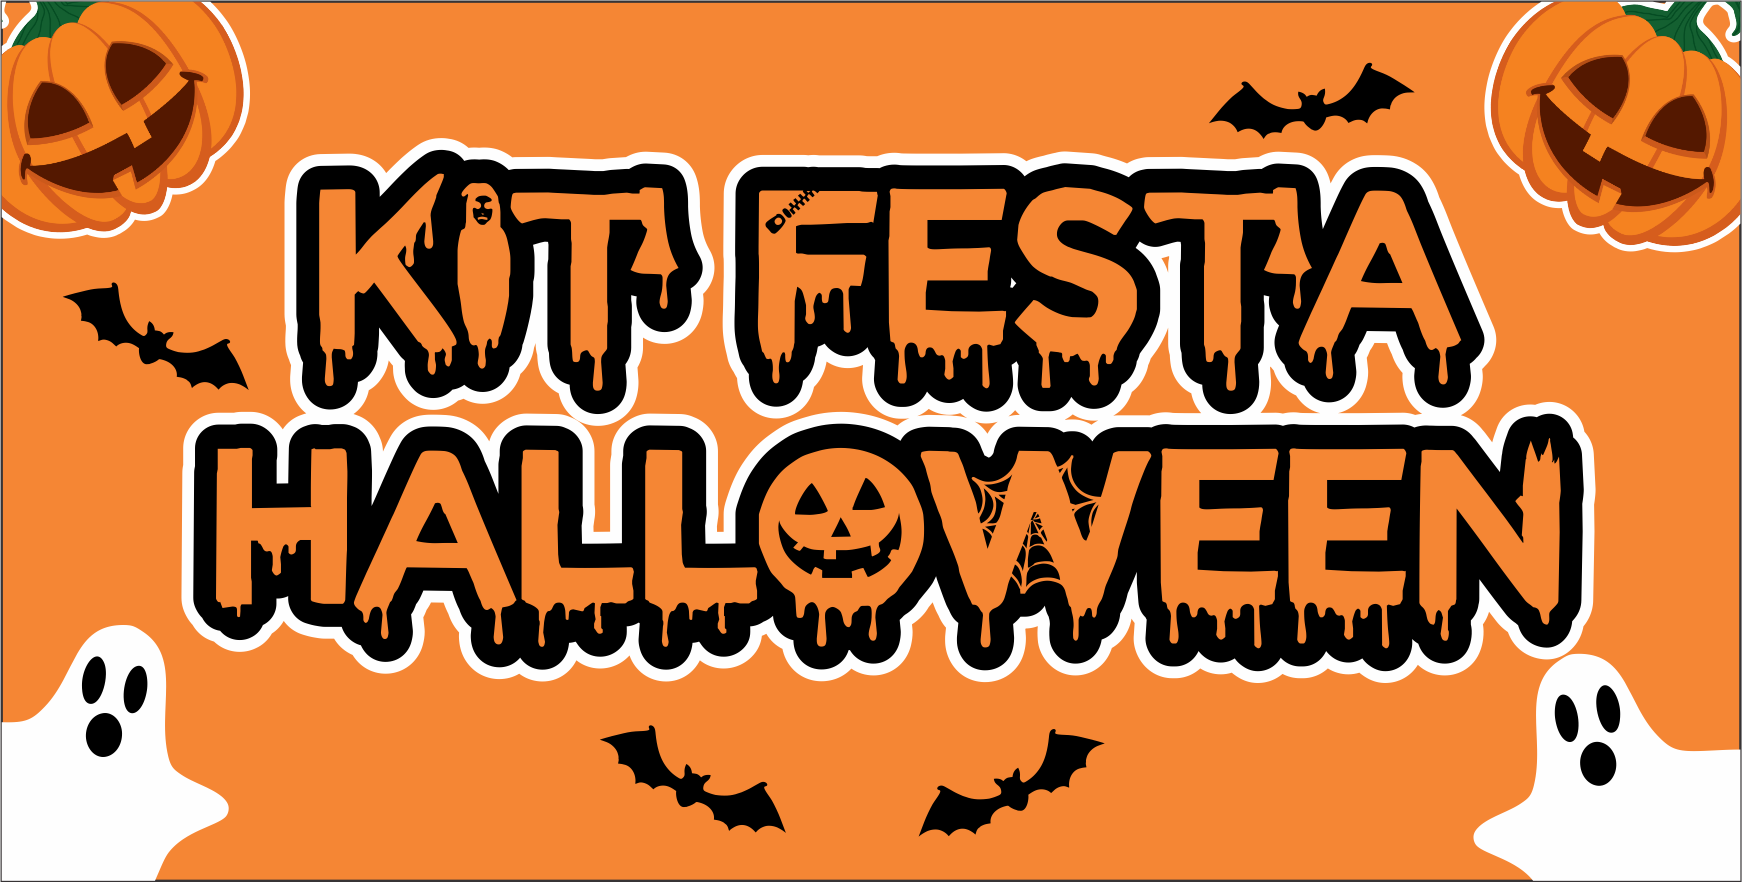 CAPA KIT FESTA HALLOWEEN - Kit festa Halloween completo pronto para imprimir